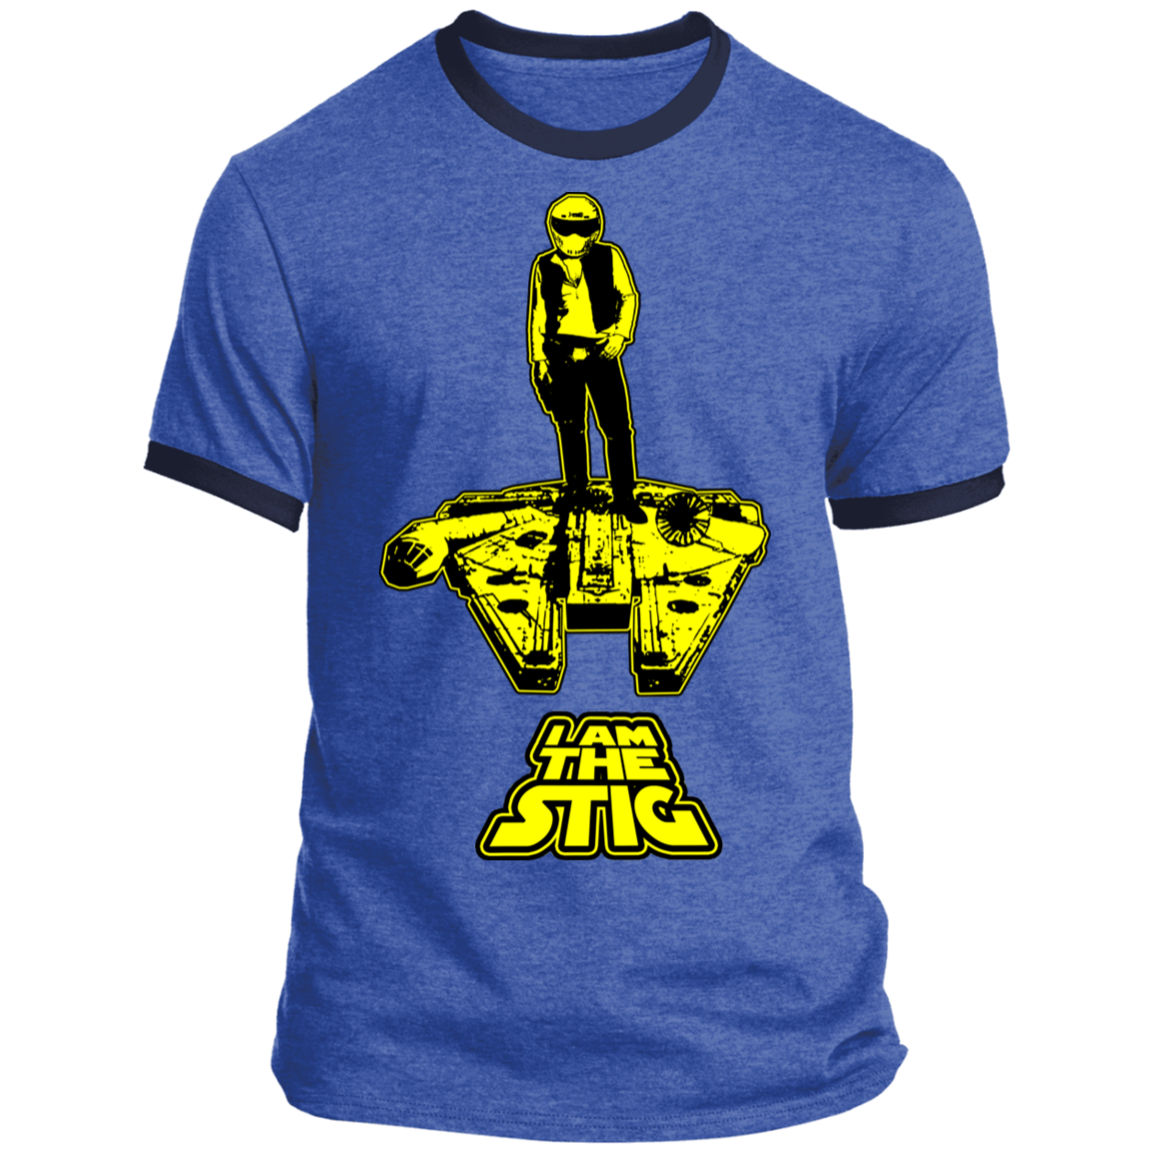 ArtichokeUSA Custom Design. I am the Stig. Han Solo / The Stig Fan Art. Ringer Tee